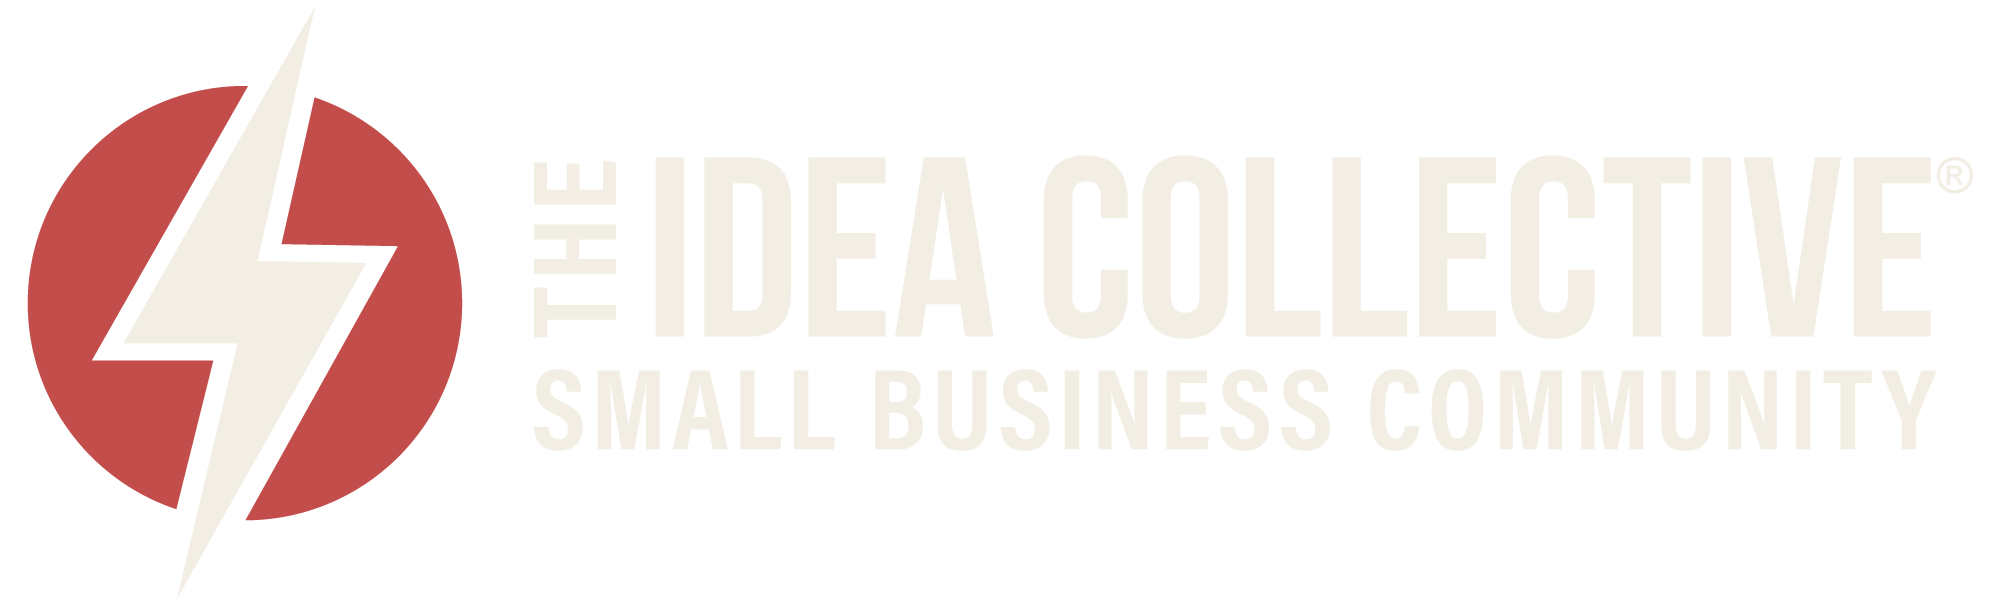 Idea Collective Small Business Community